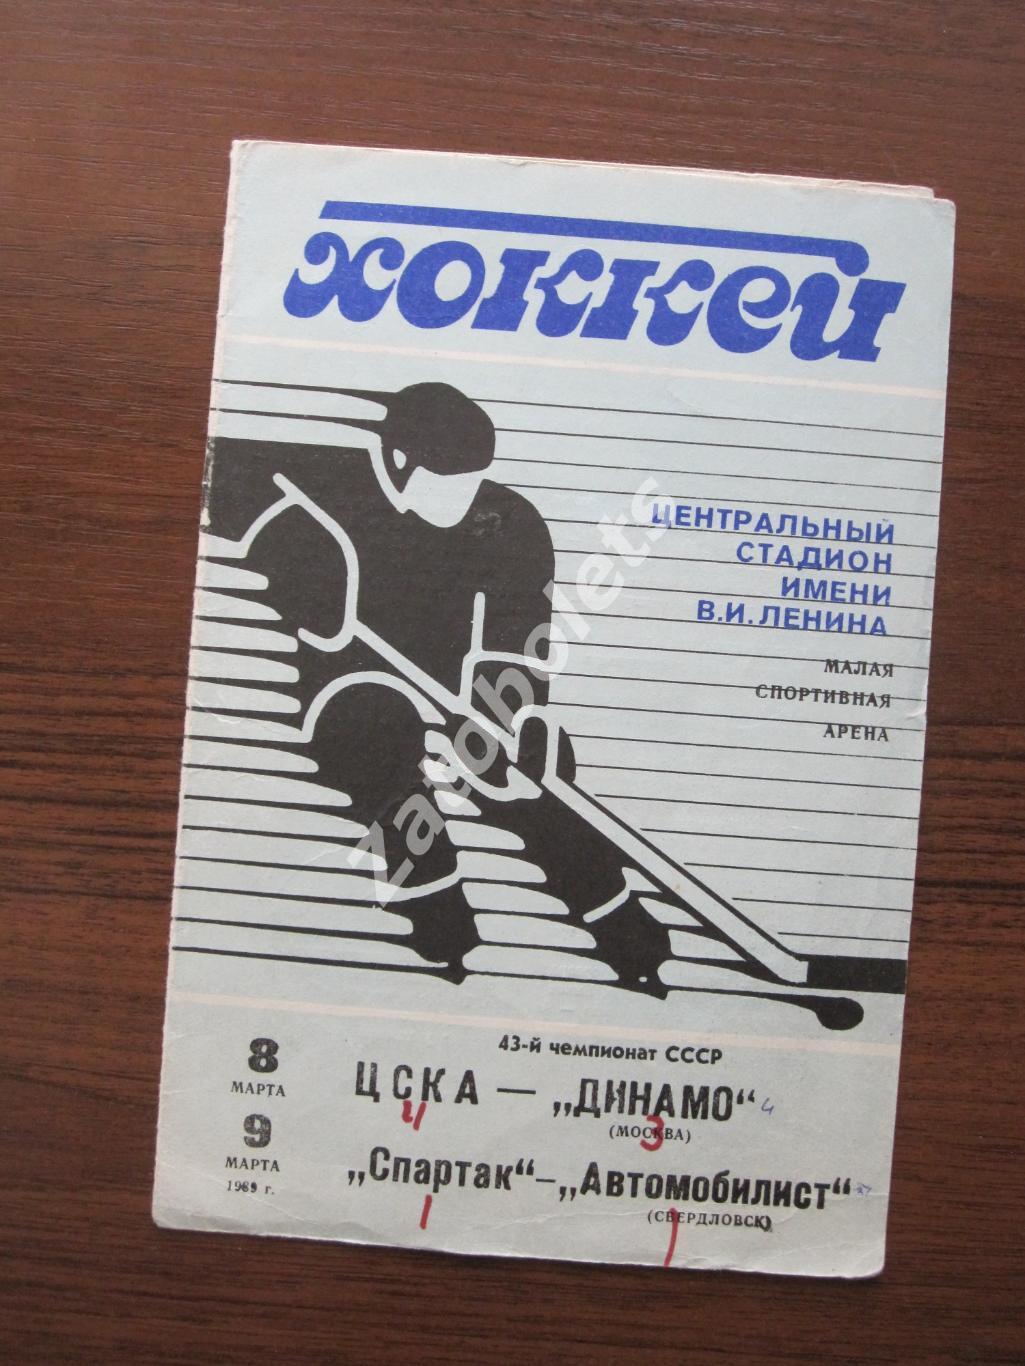 ЦСКА - Динамо Москва / Спартак Москва - Автомобилист 08-09.03.1989